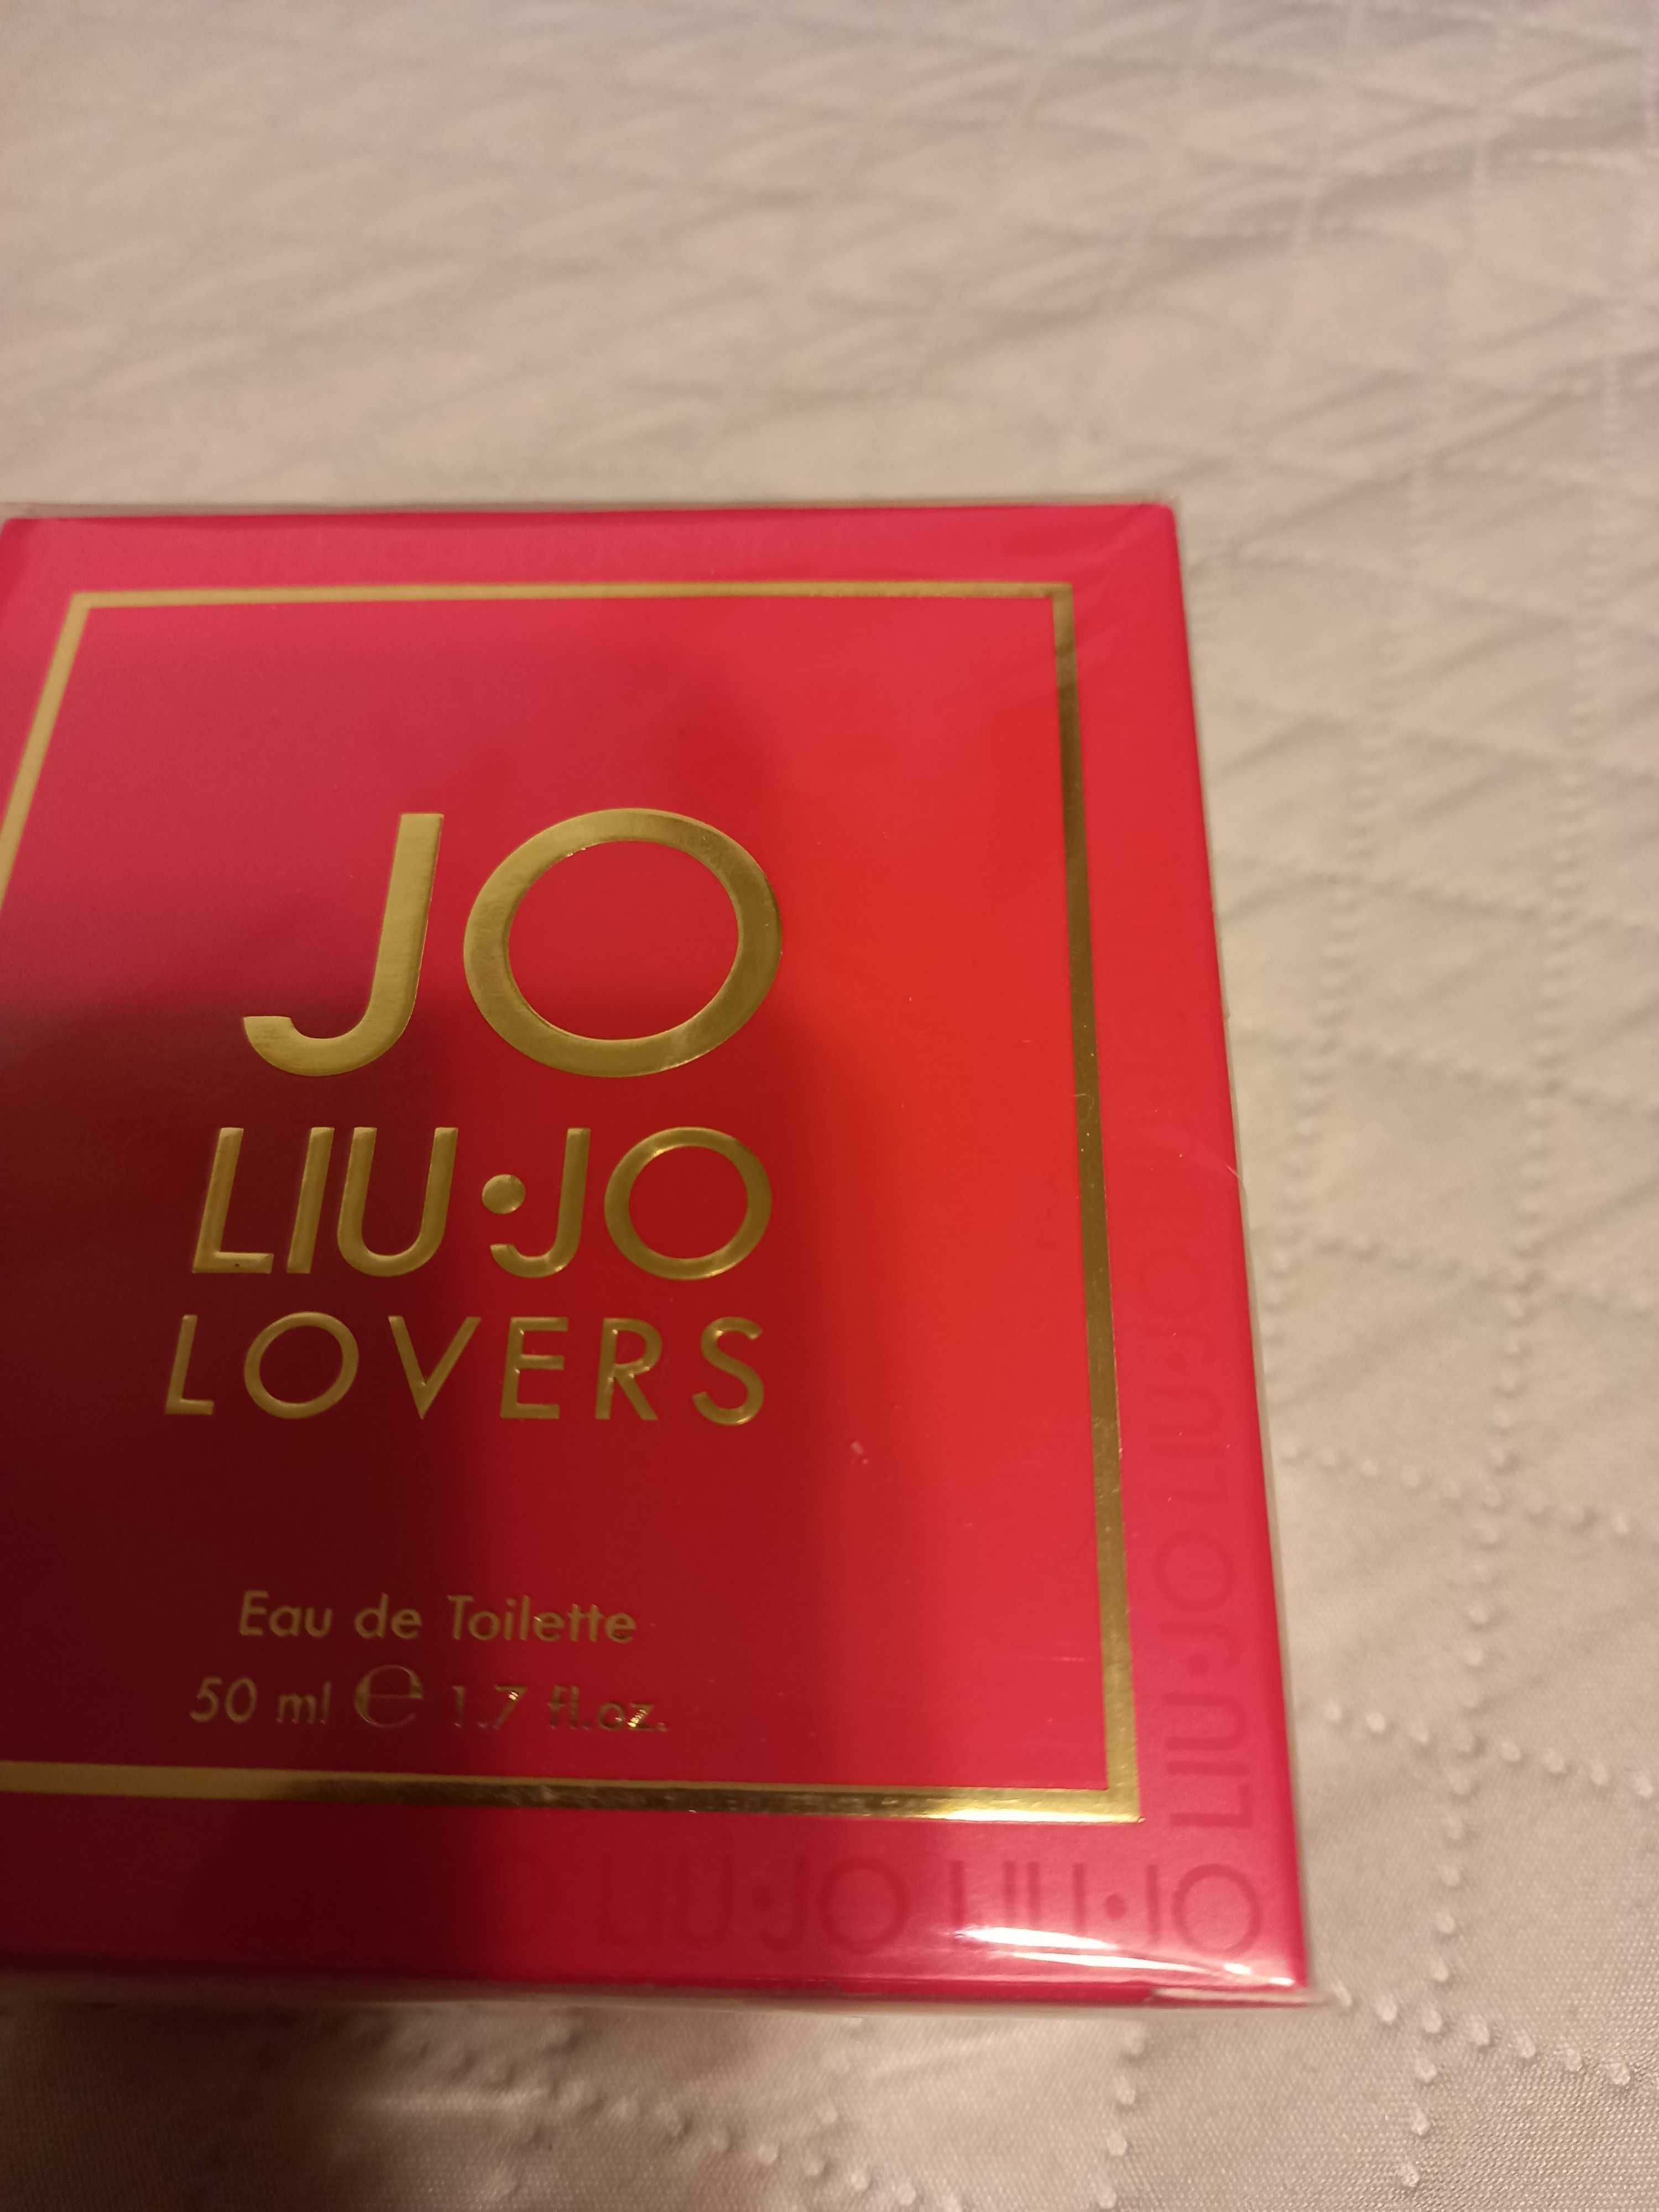 Lovers JO Liu Jo  50 ml. oryginalne  perfumy